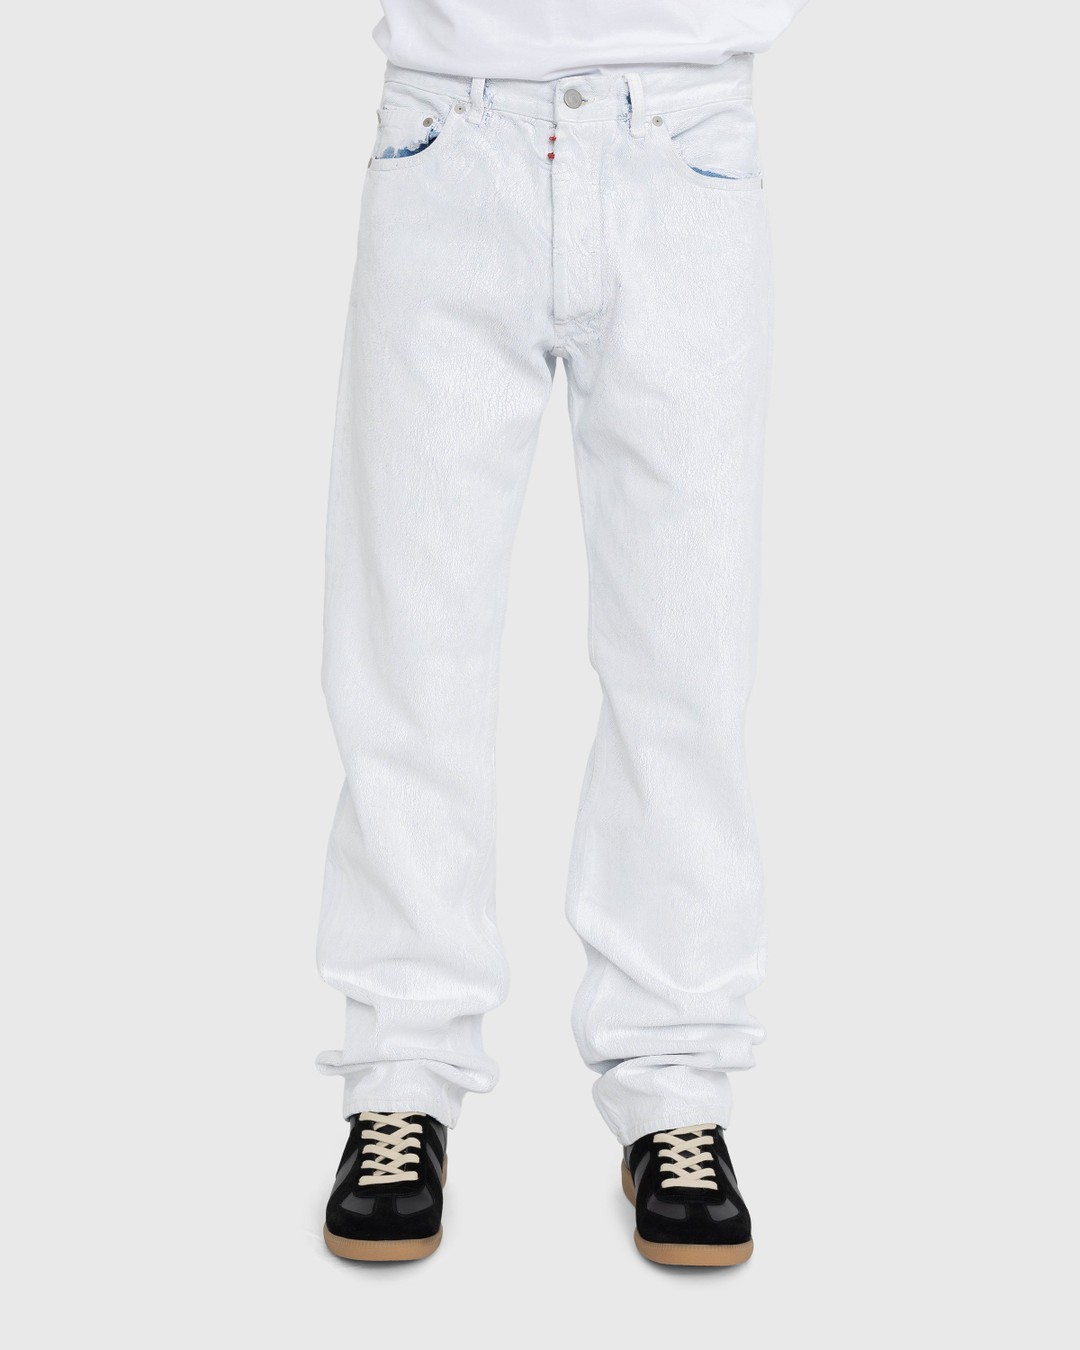 Maison Margiela – 5-Pocket Paint Jeans White - Denim - White - Image 2